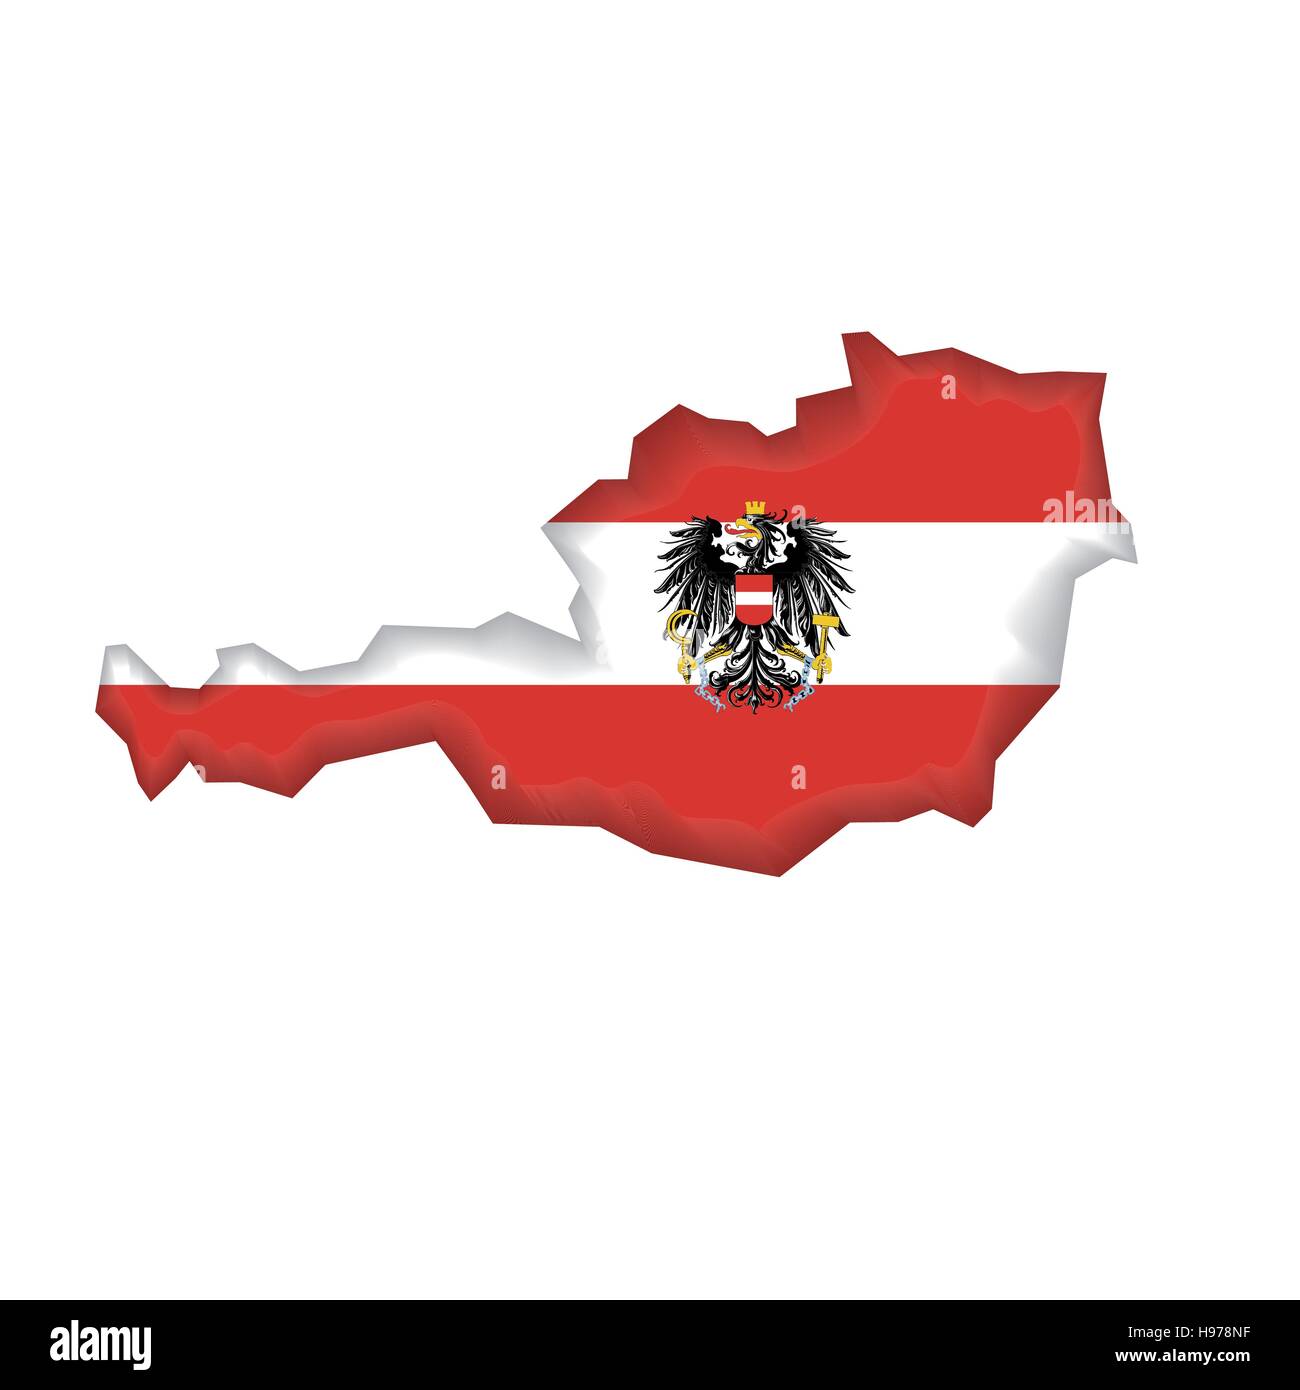 Flagge Karte Österreich Stock-Vektorgrafik - Alamy